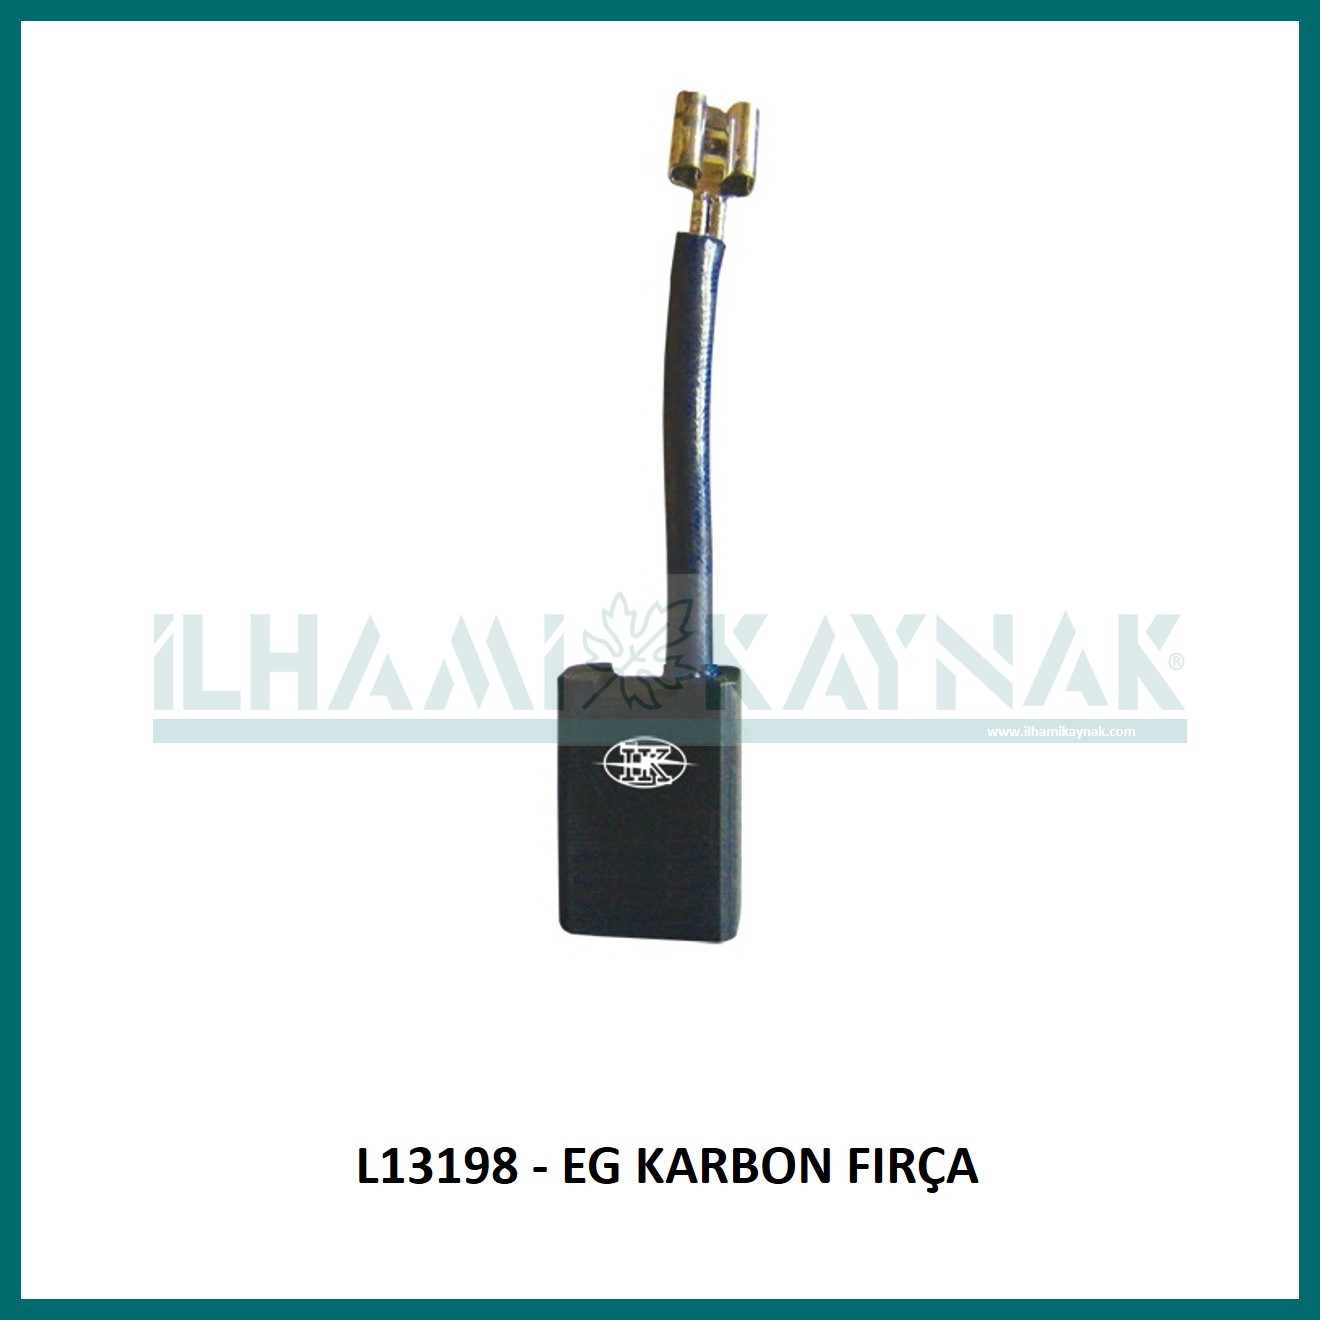 L13198 - EG KARBON FIRÇA - 8*14*25 mm - Minimum Satın Alım: 10 Adet